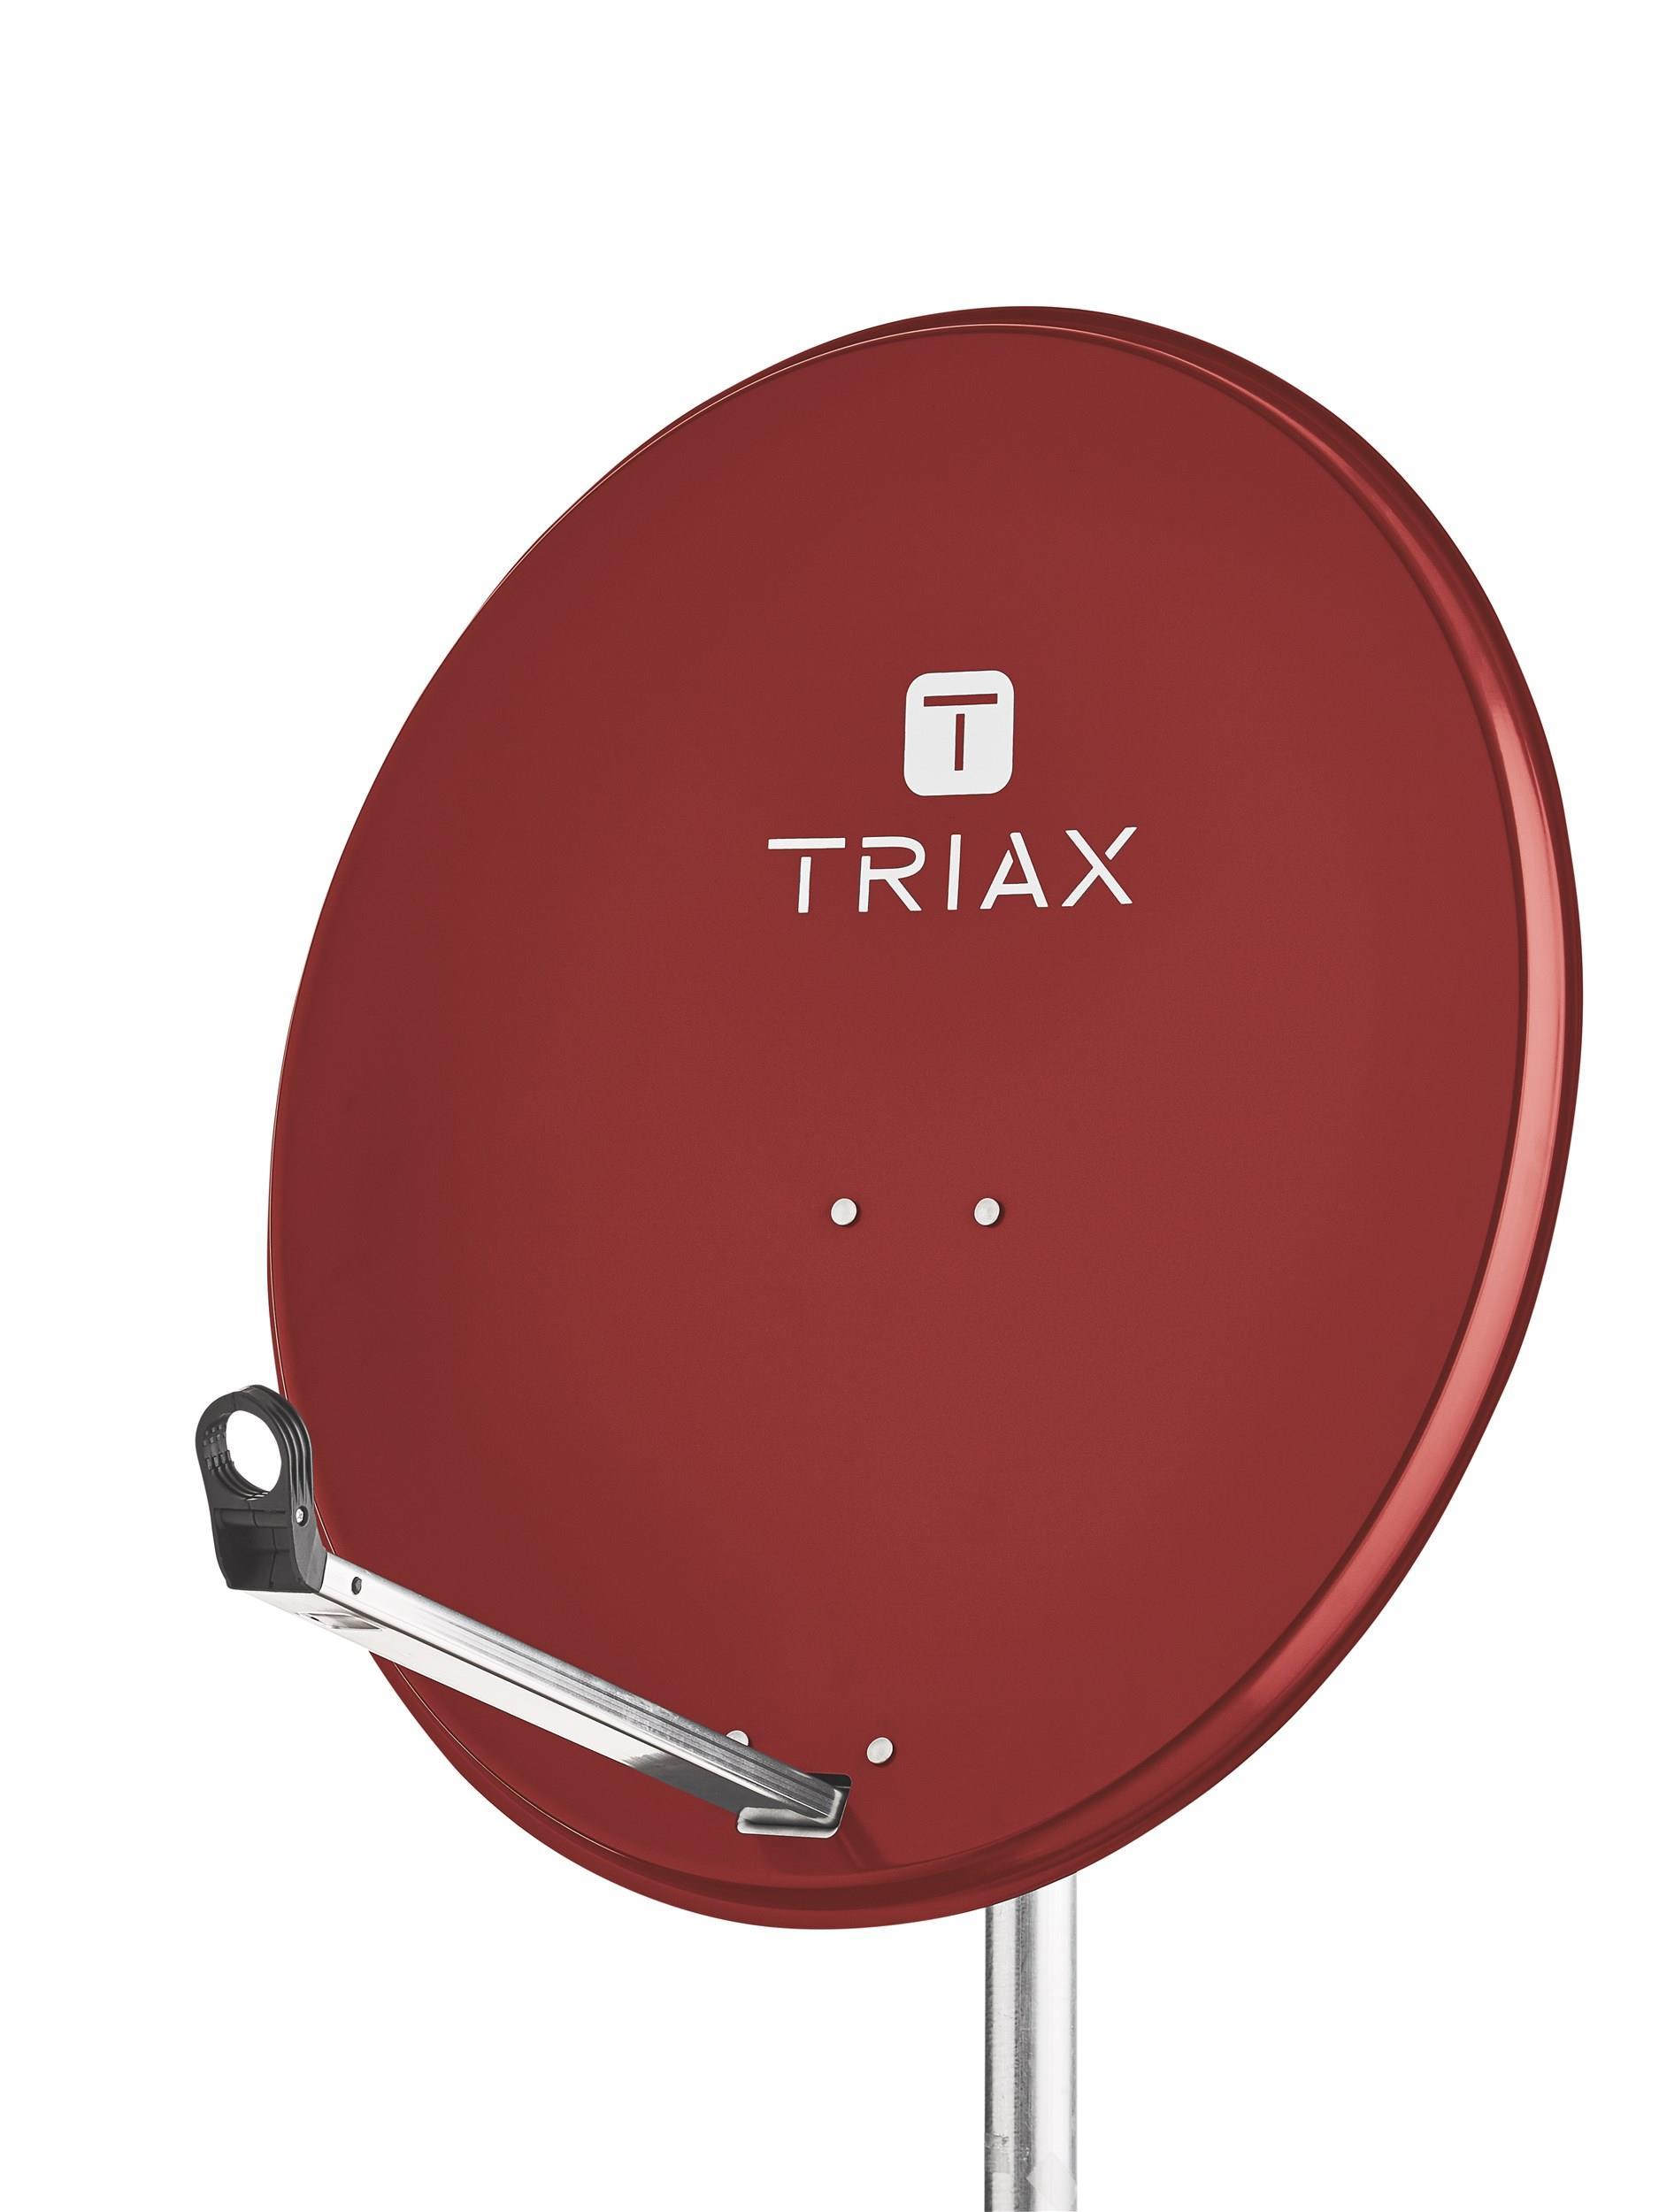 TRIAX TDA 80LG 80 cm Alu Aluminium Sat Satelliten Spiegel Schüssel lichtgrau 